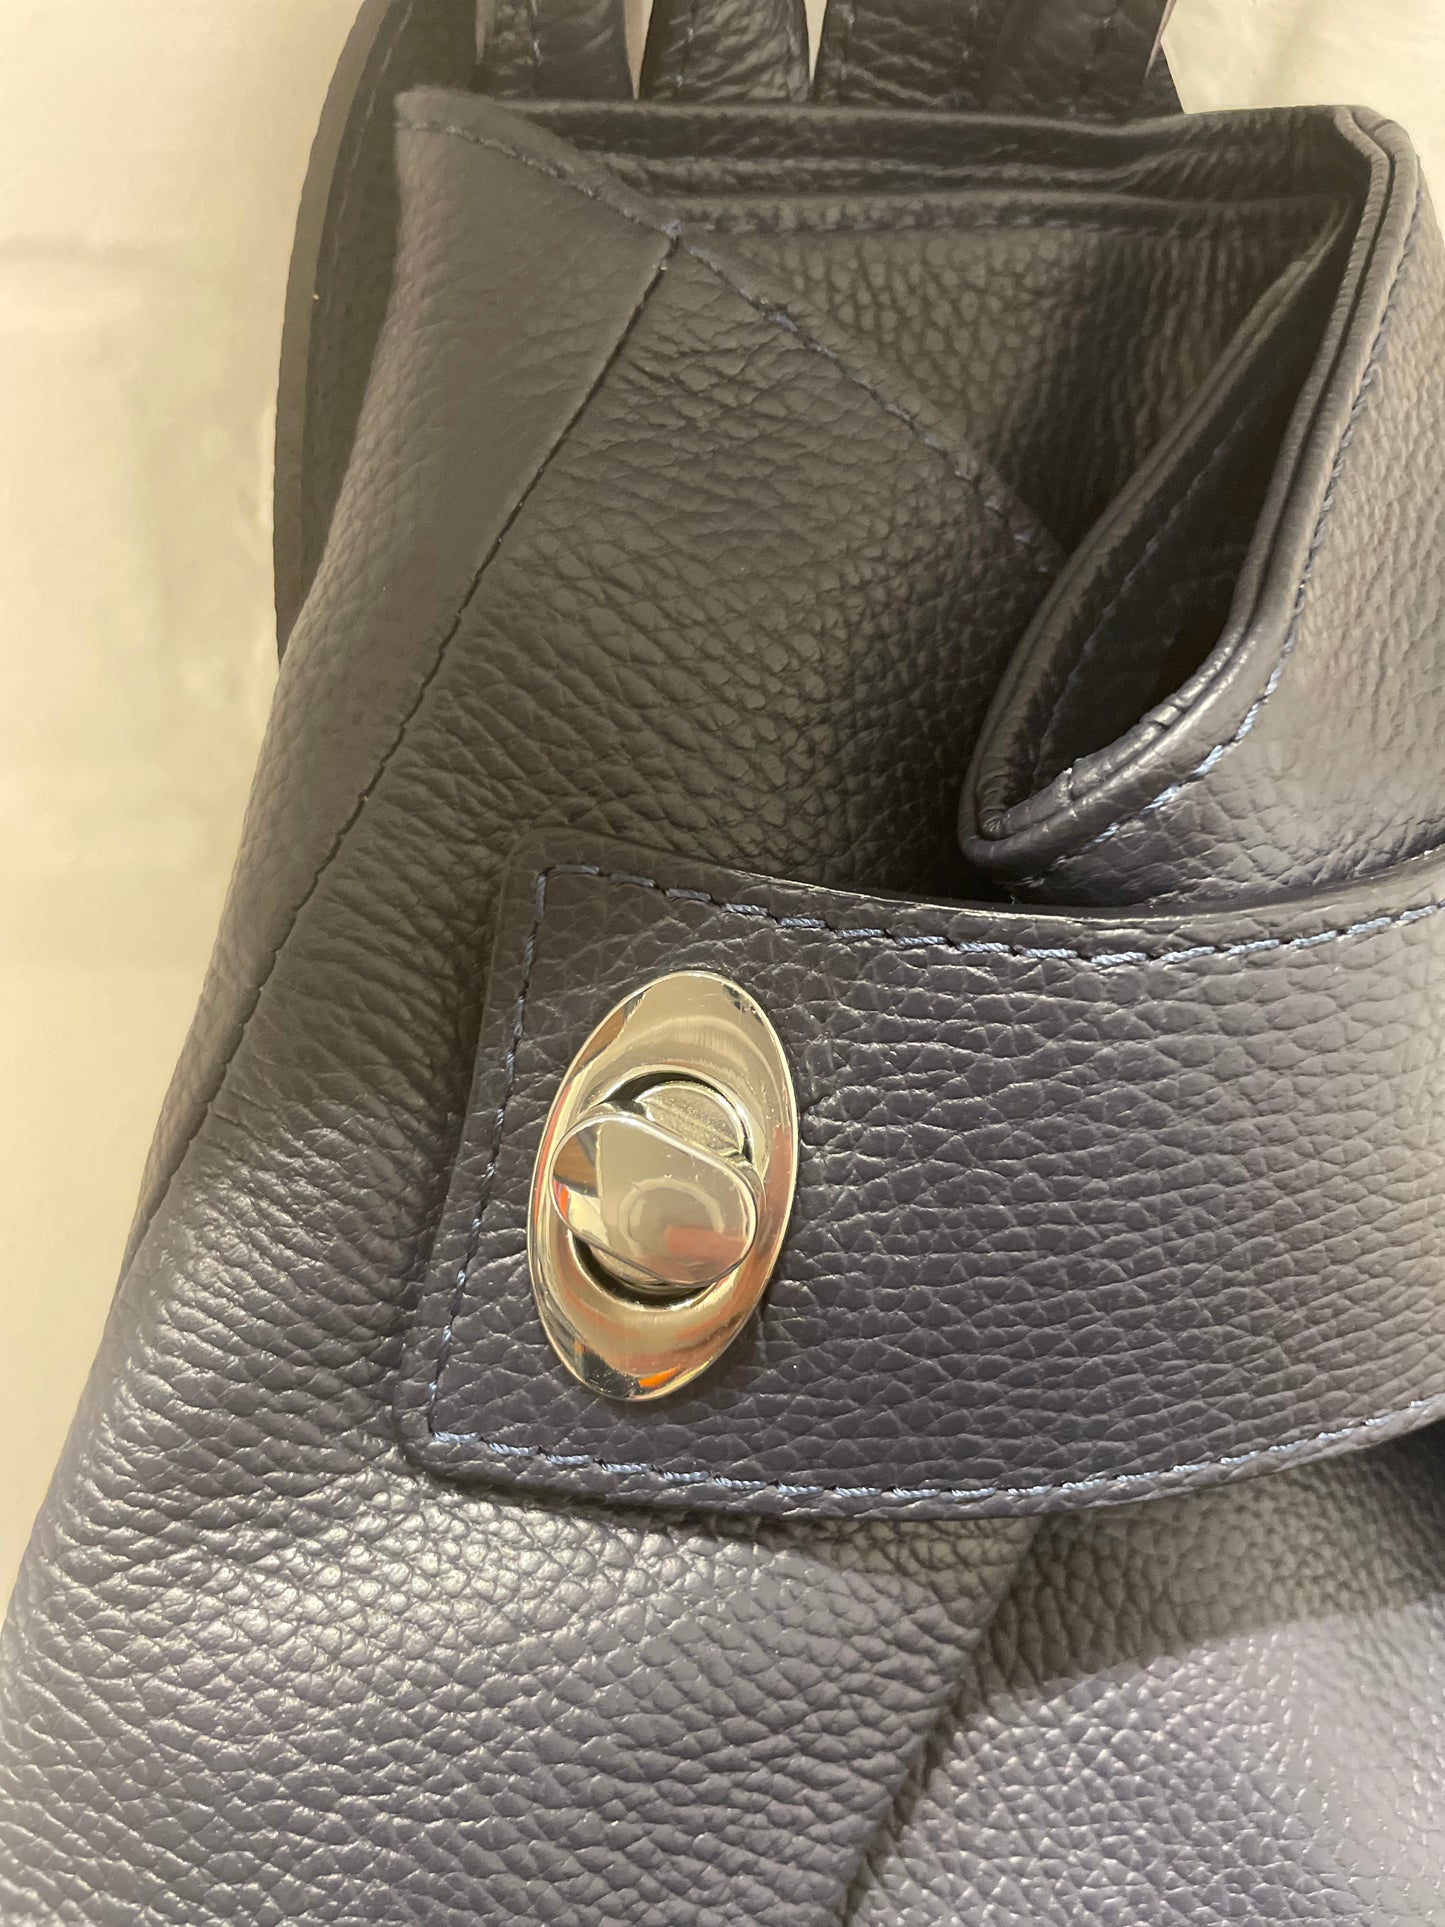 Soft Leather Rucksack | Navy